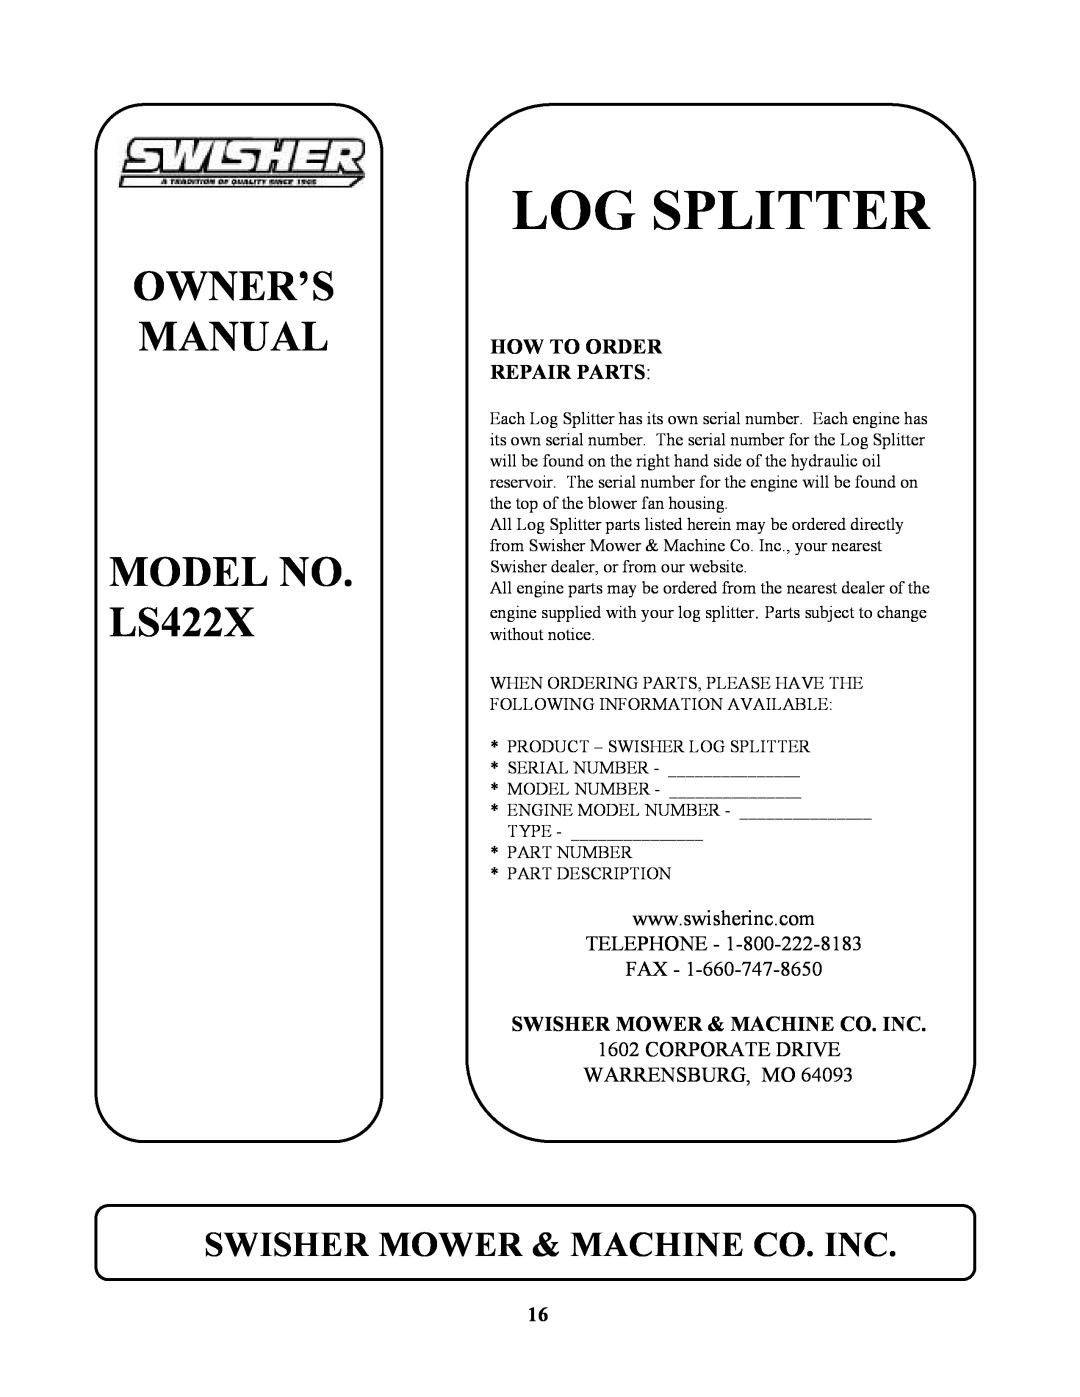 Swisher Log Splitter, OWNER’S MANUAL MODEL NO. LS422X, Swisher Mower & Machine Co. Inc, How To Order Repair Parts 